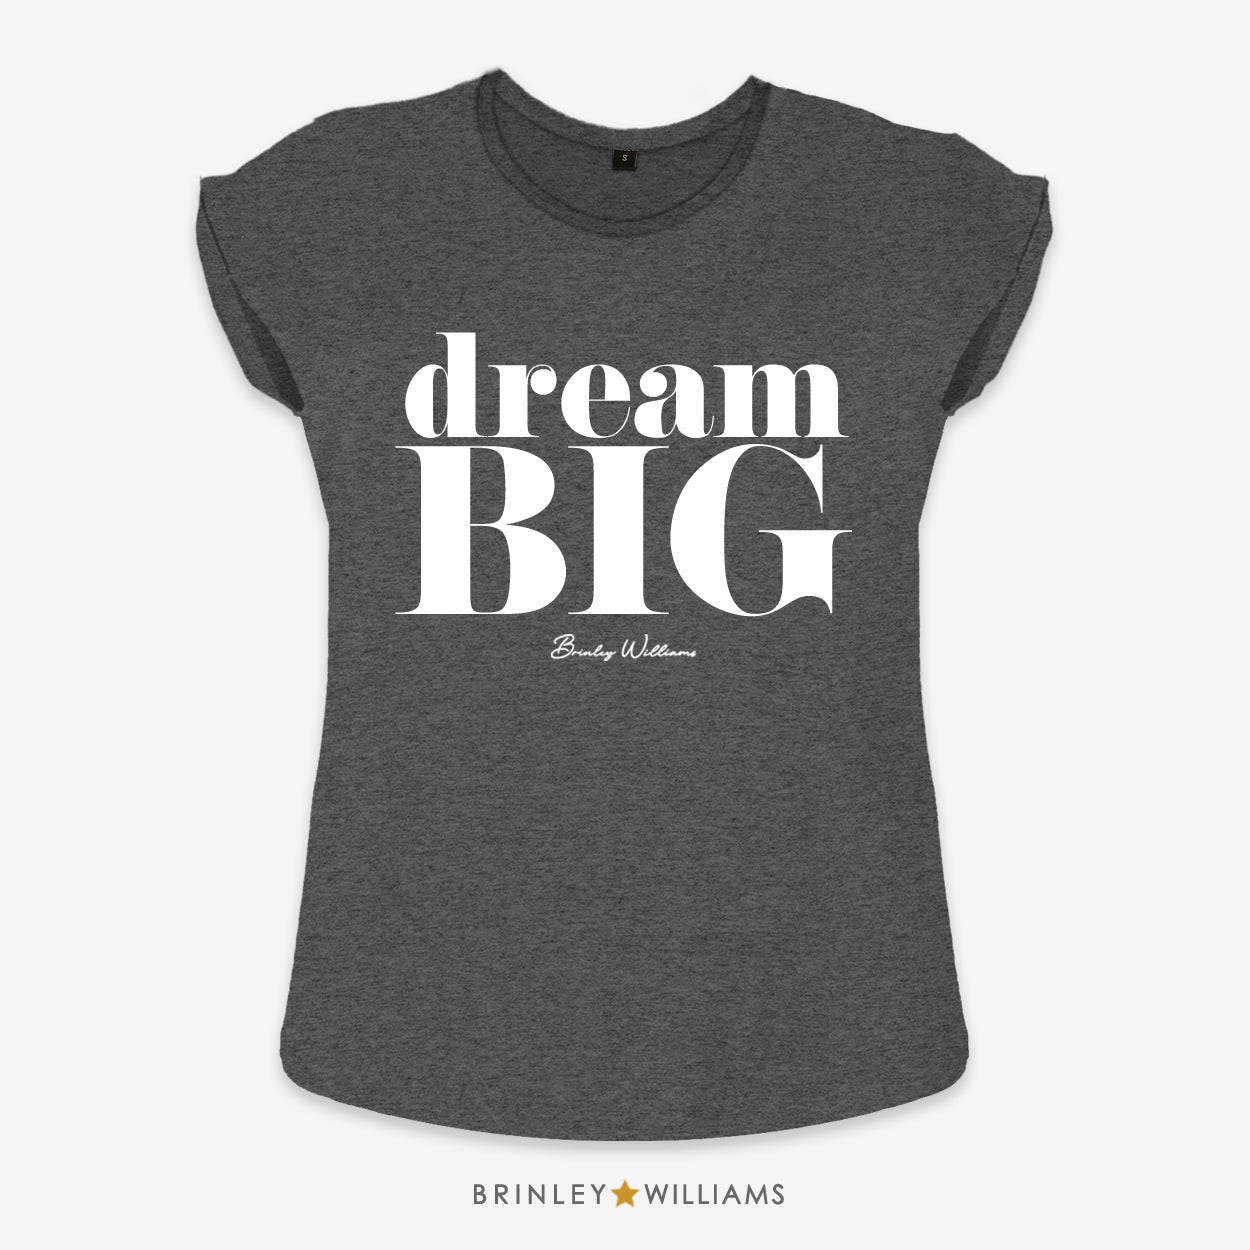 Dream Big Rolled Sleeve T-shirt - Charcoal